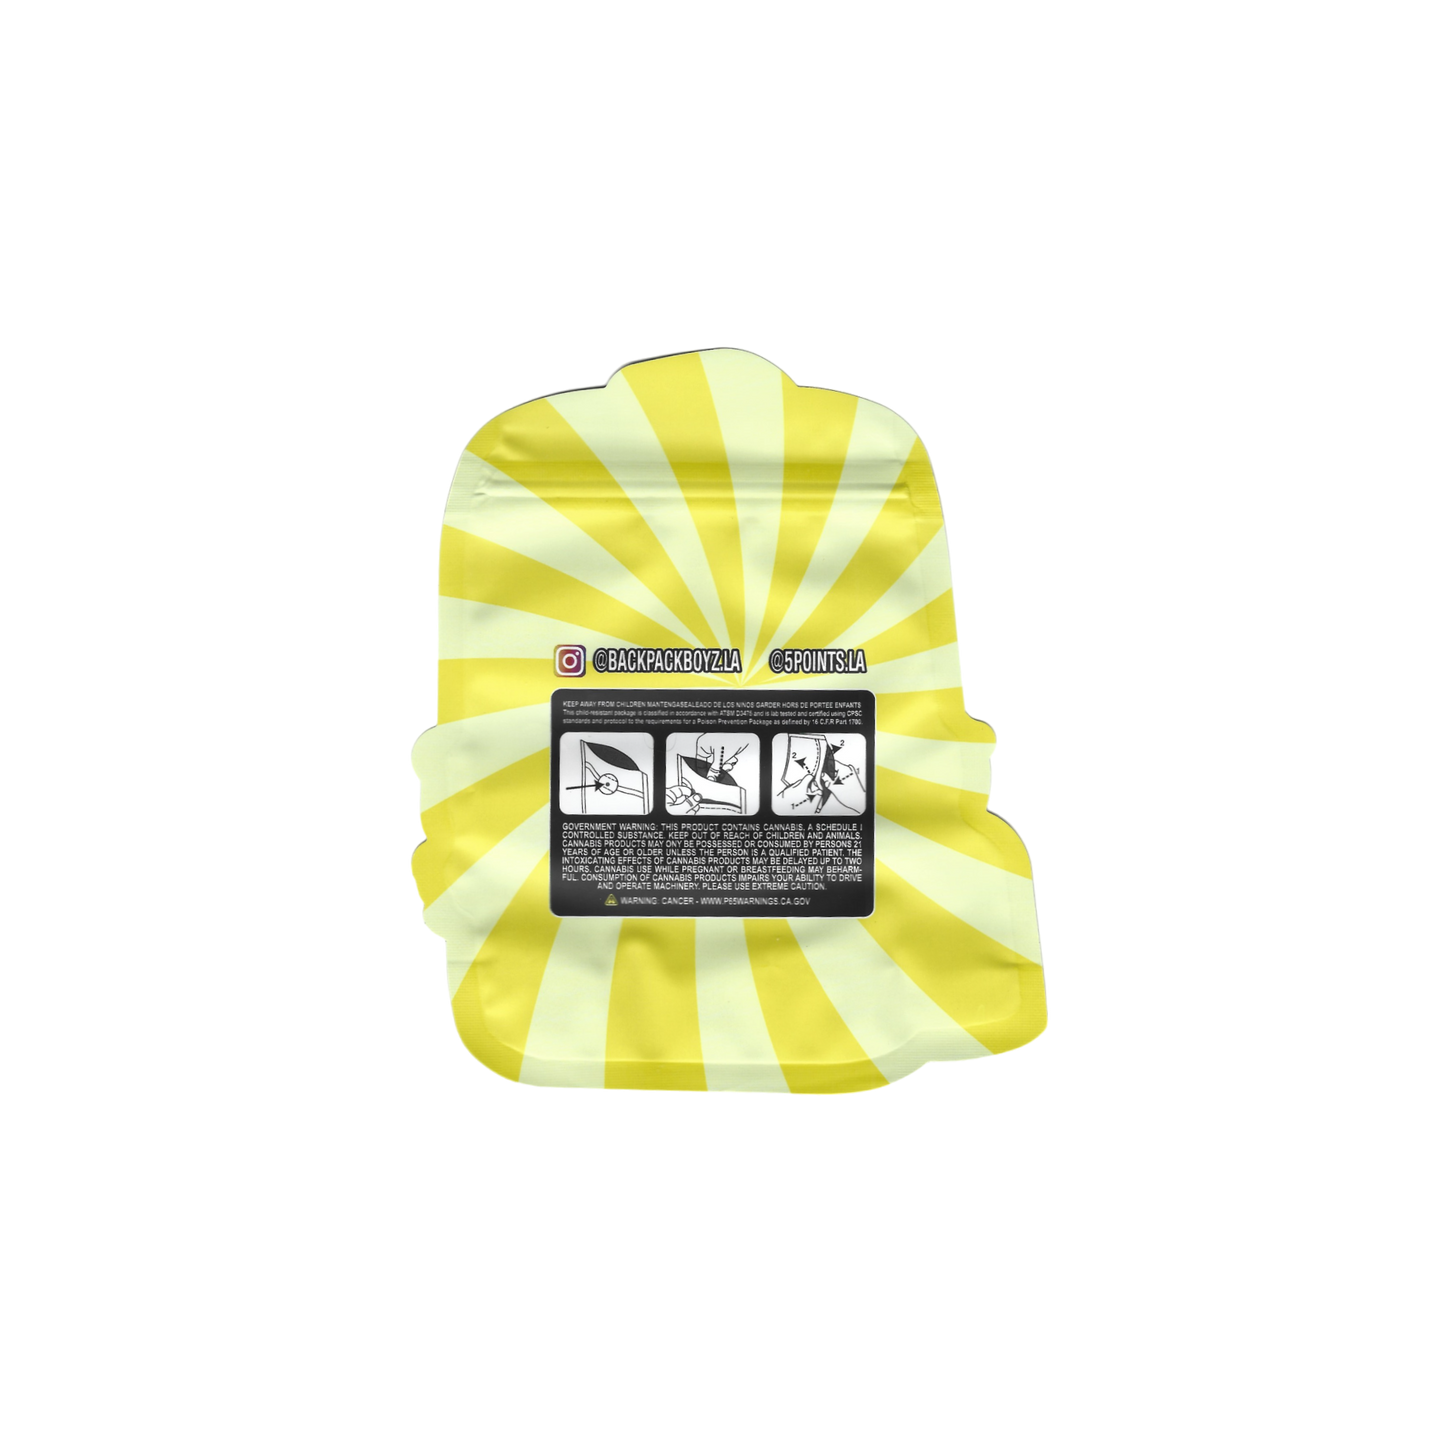 10x Backpackboyz Lemon cherry gelato smalls shaped Mylar Bag 3,5g - Leer